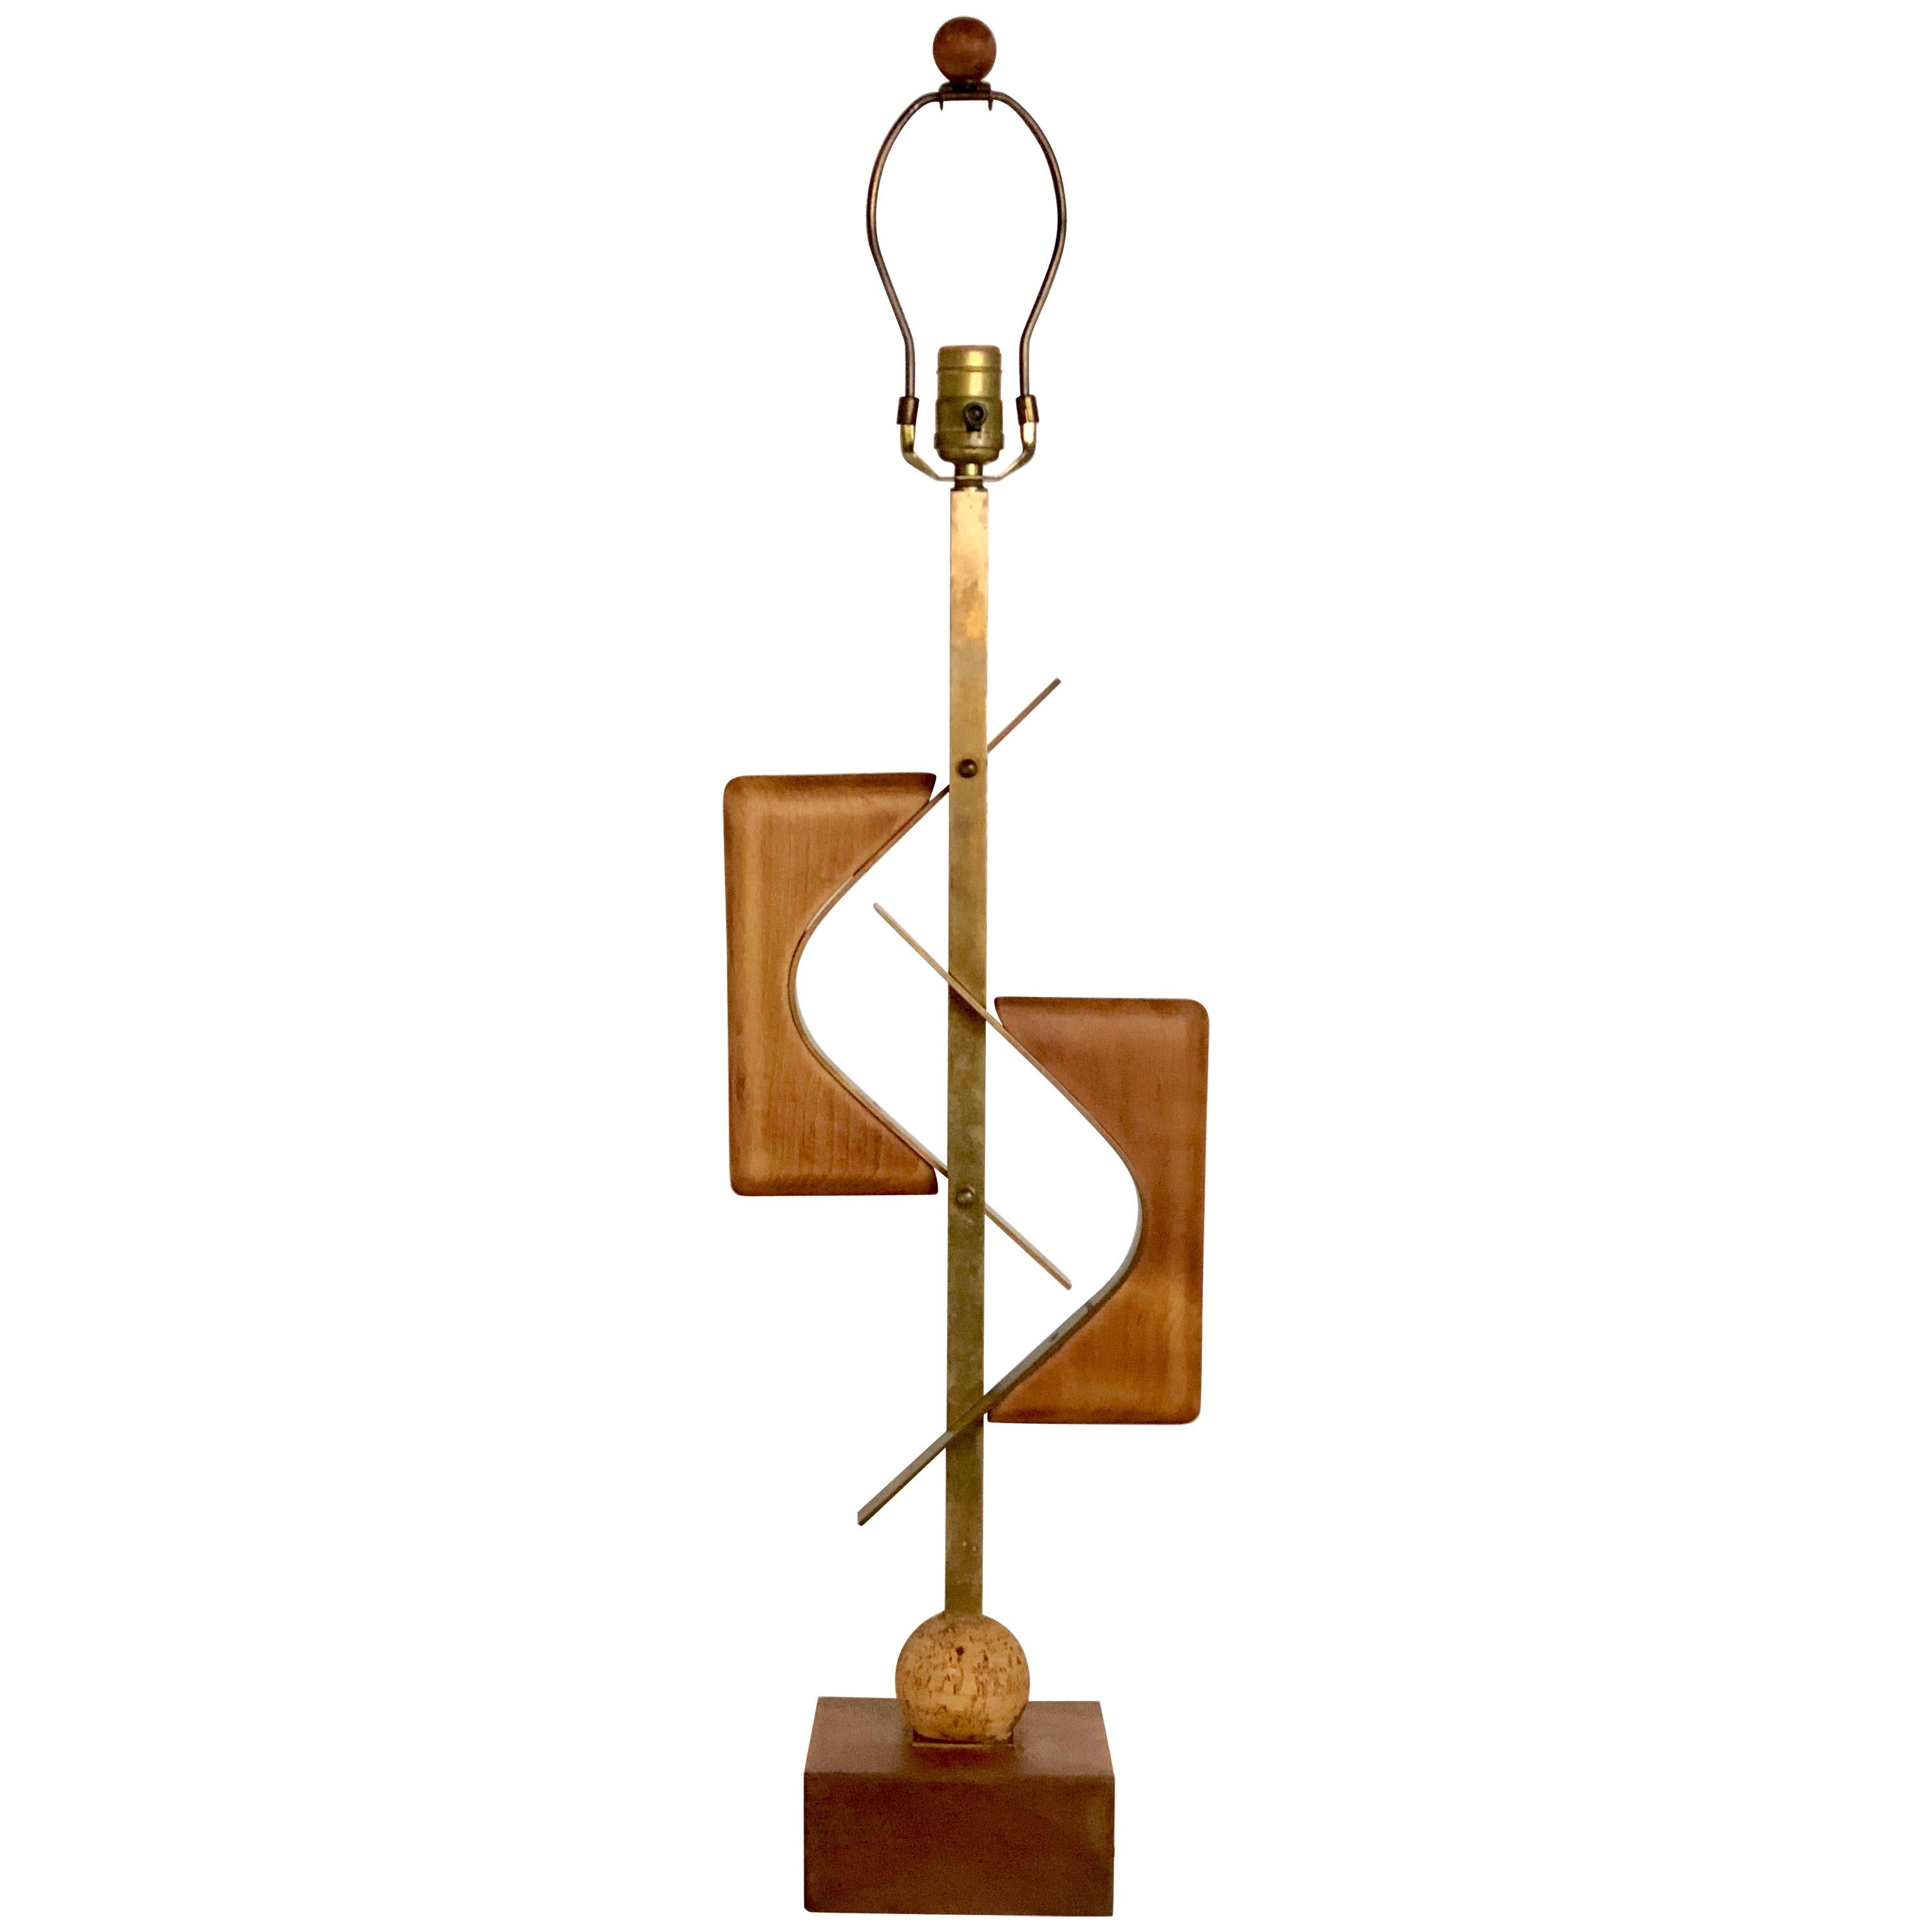 Sculptural Midcentury Lamp of Walnut, Brass, and Cork